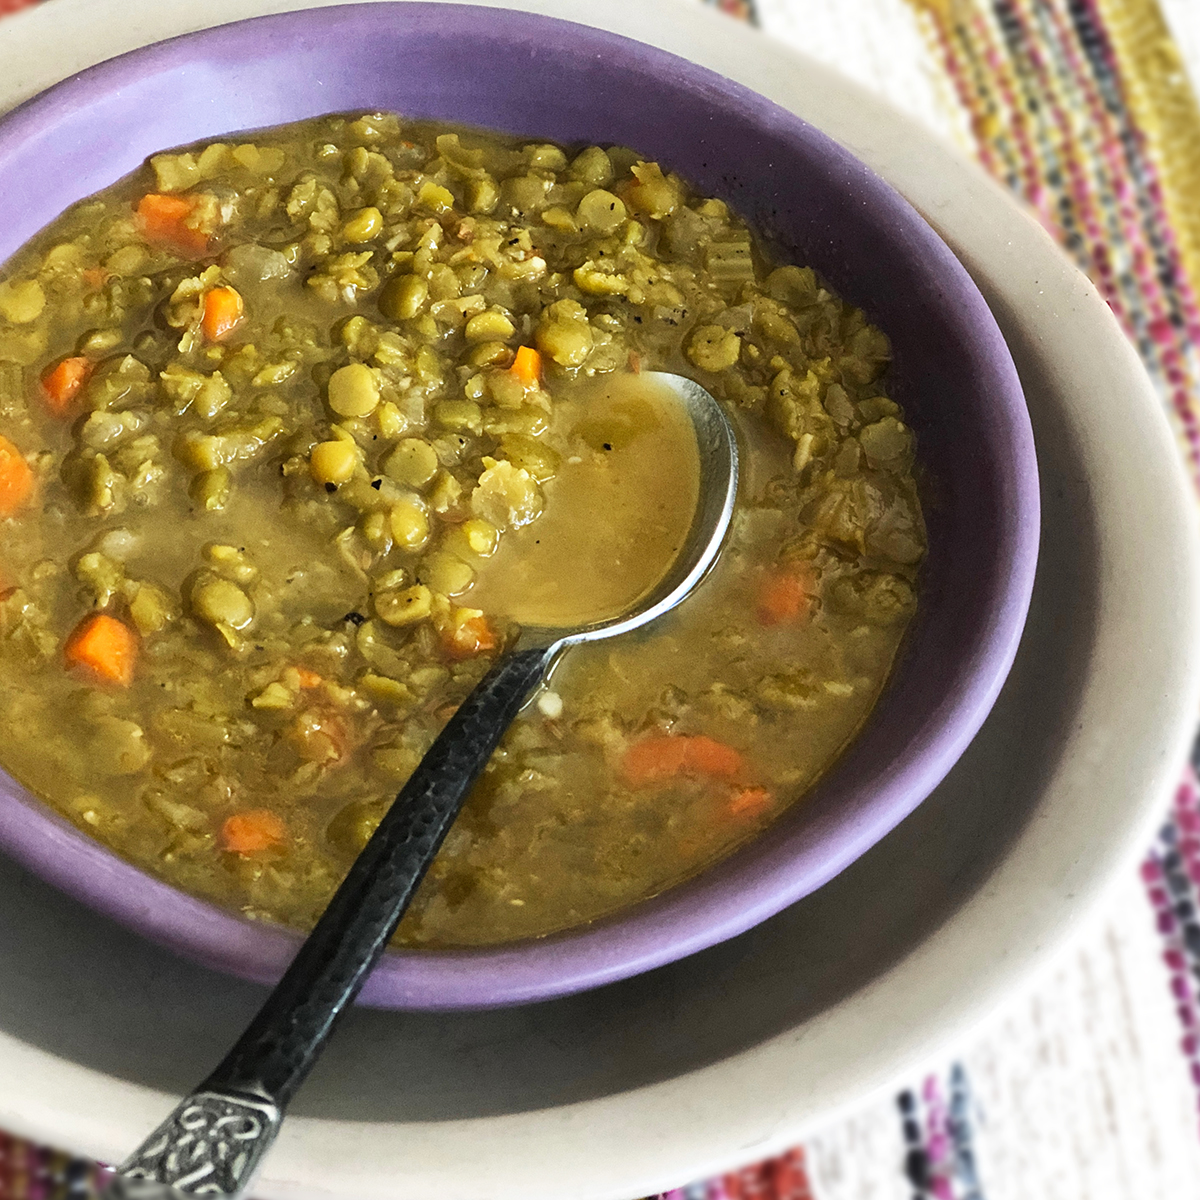 Vegan split pea soup